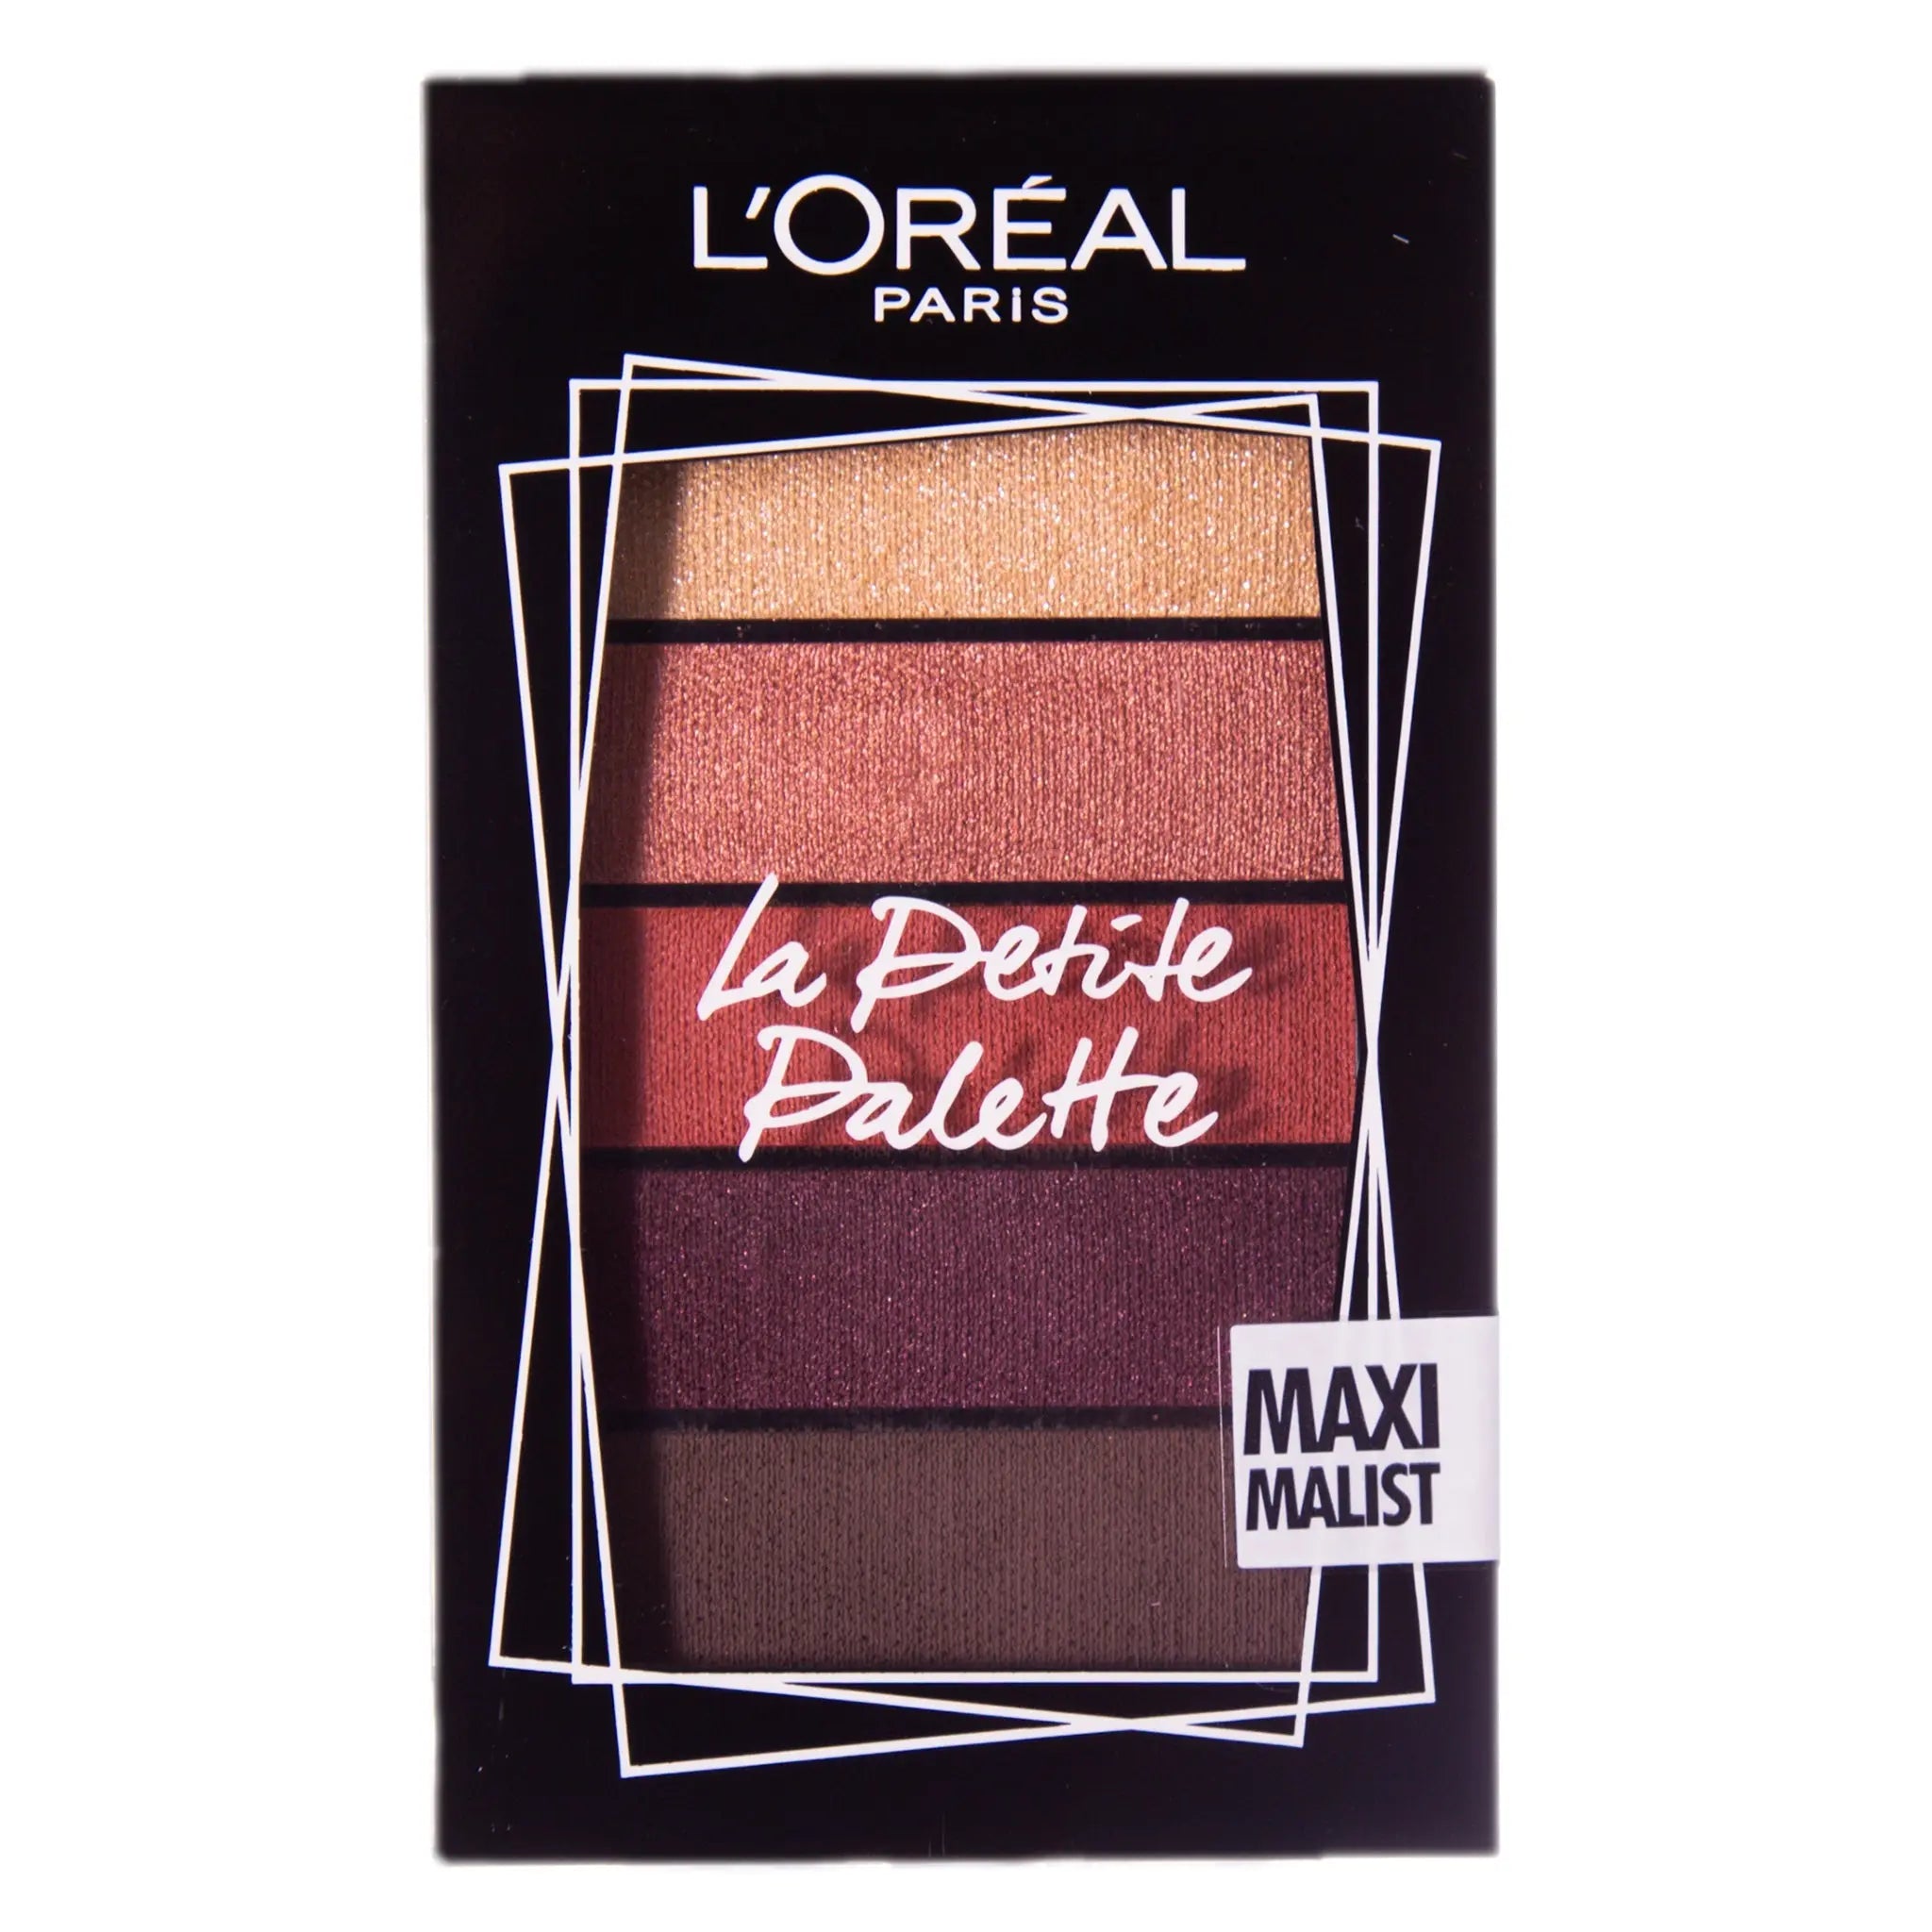 Image of L'Oreal Paris Mini Eyeshadow Palette - Maximalist